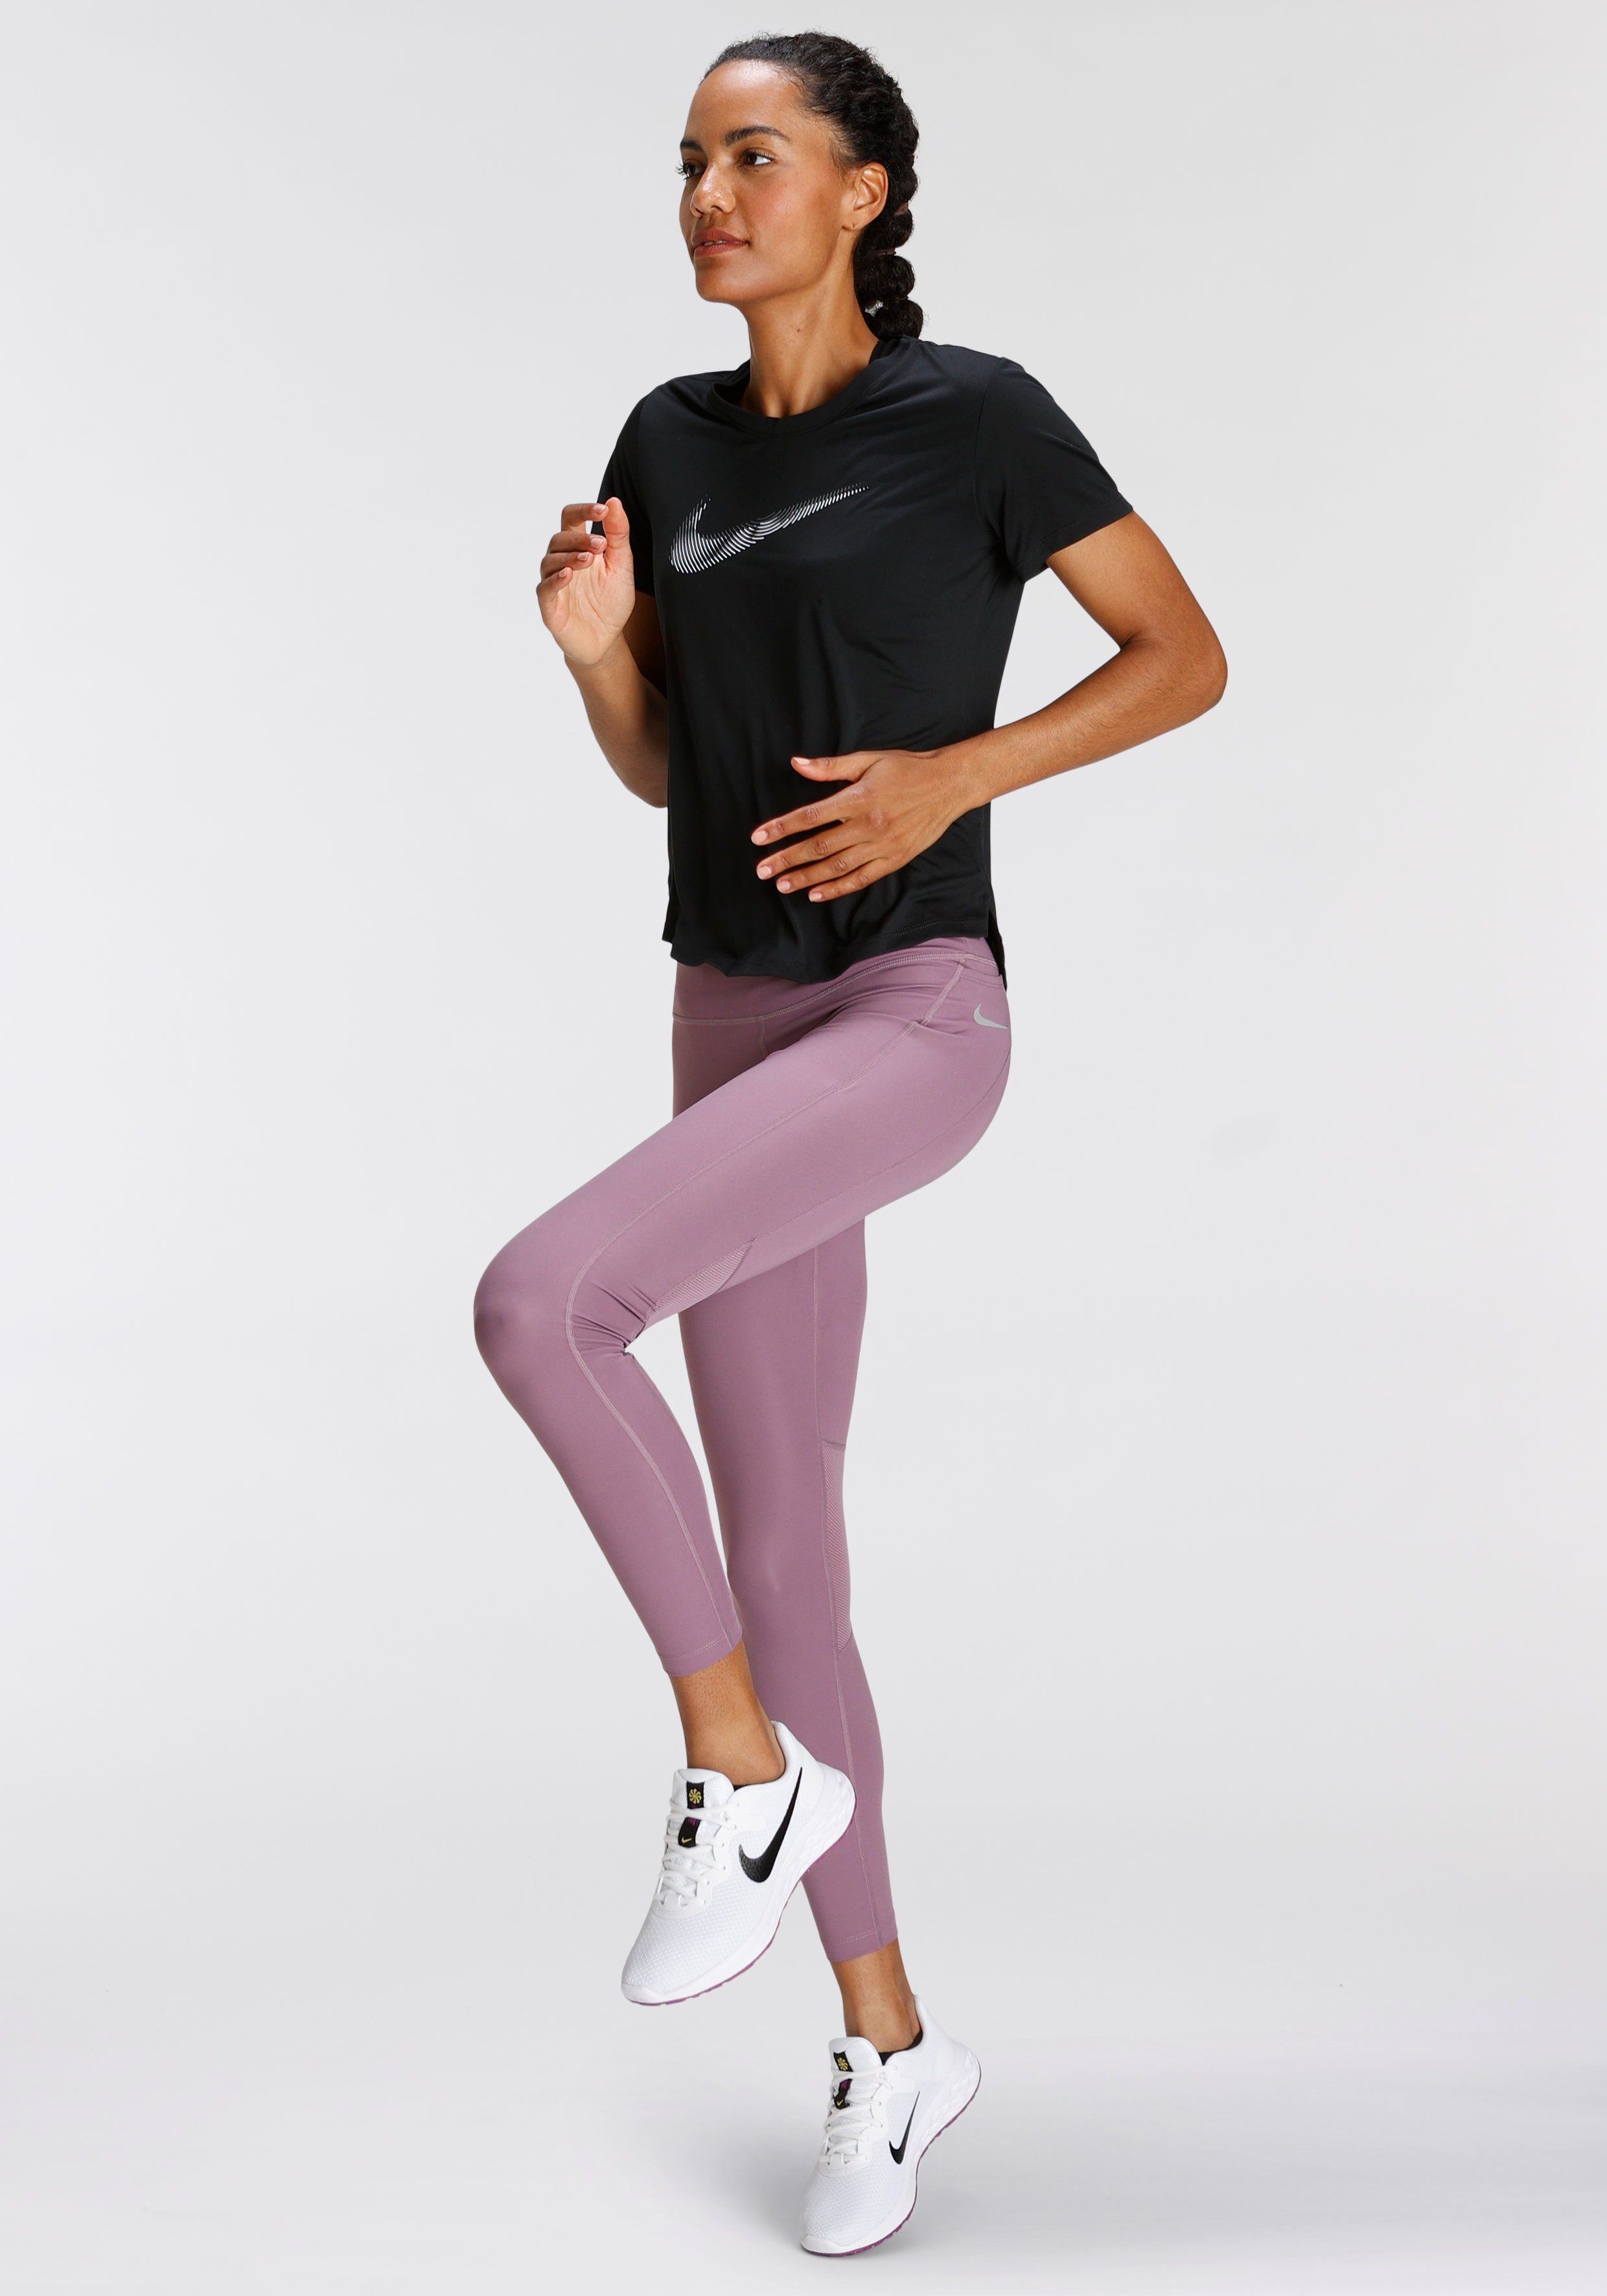 SHORT-SLEEVE RUNNING Nike TOP WOMEN'S DRI-FIT BLACK/COOL GREY SWOOSH Laufshirt